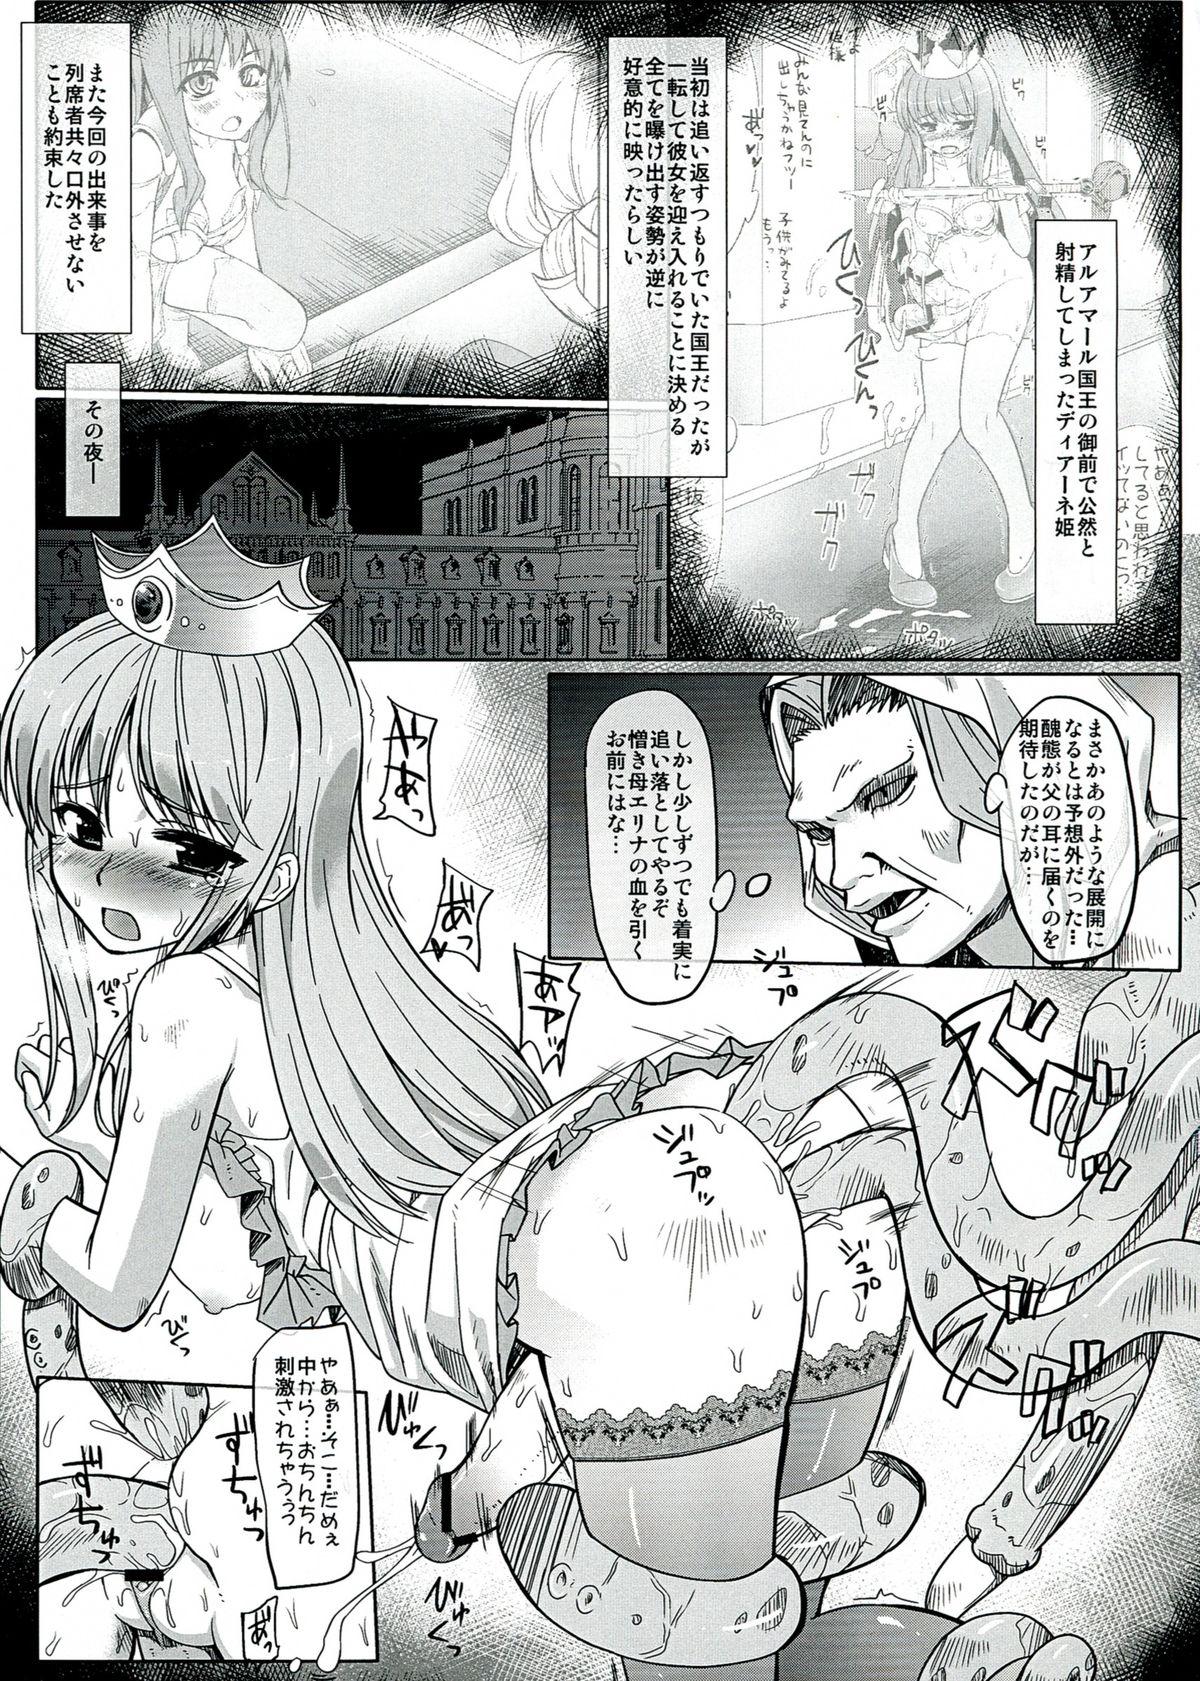 Messy Chijoku Jokamachi 7 Dress - Page 5